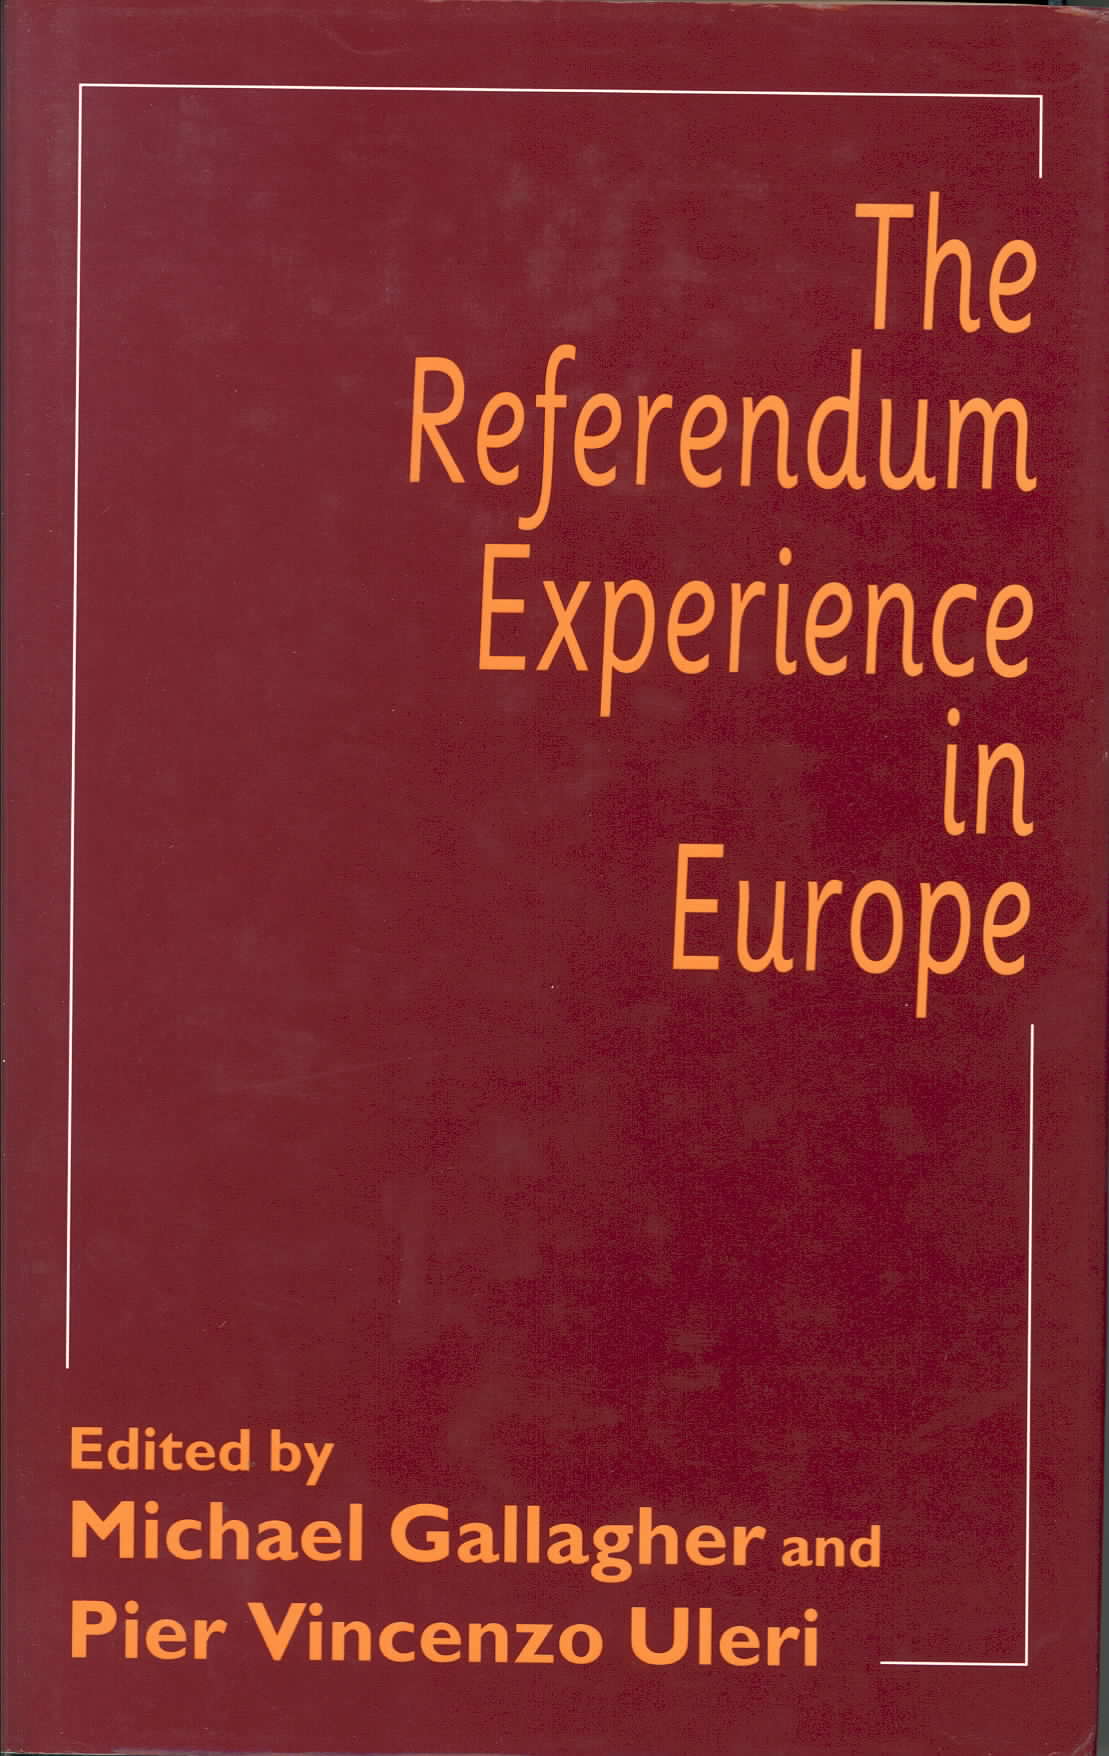 Referendums cover